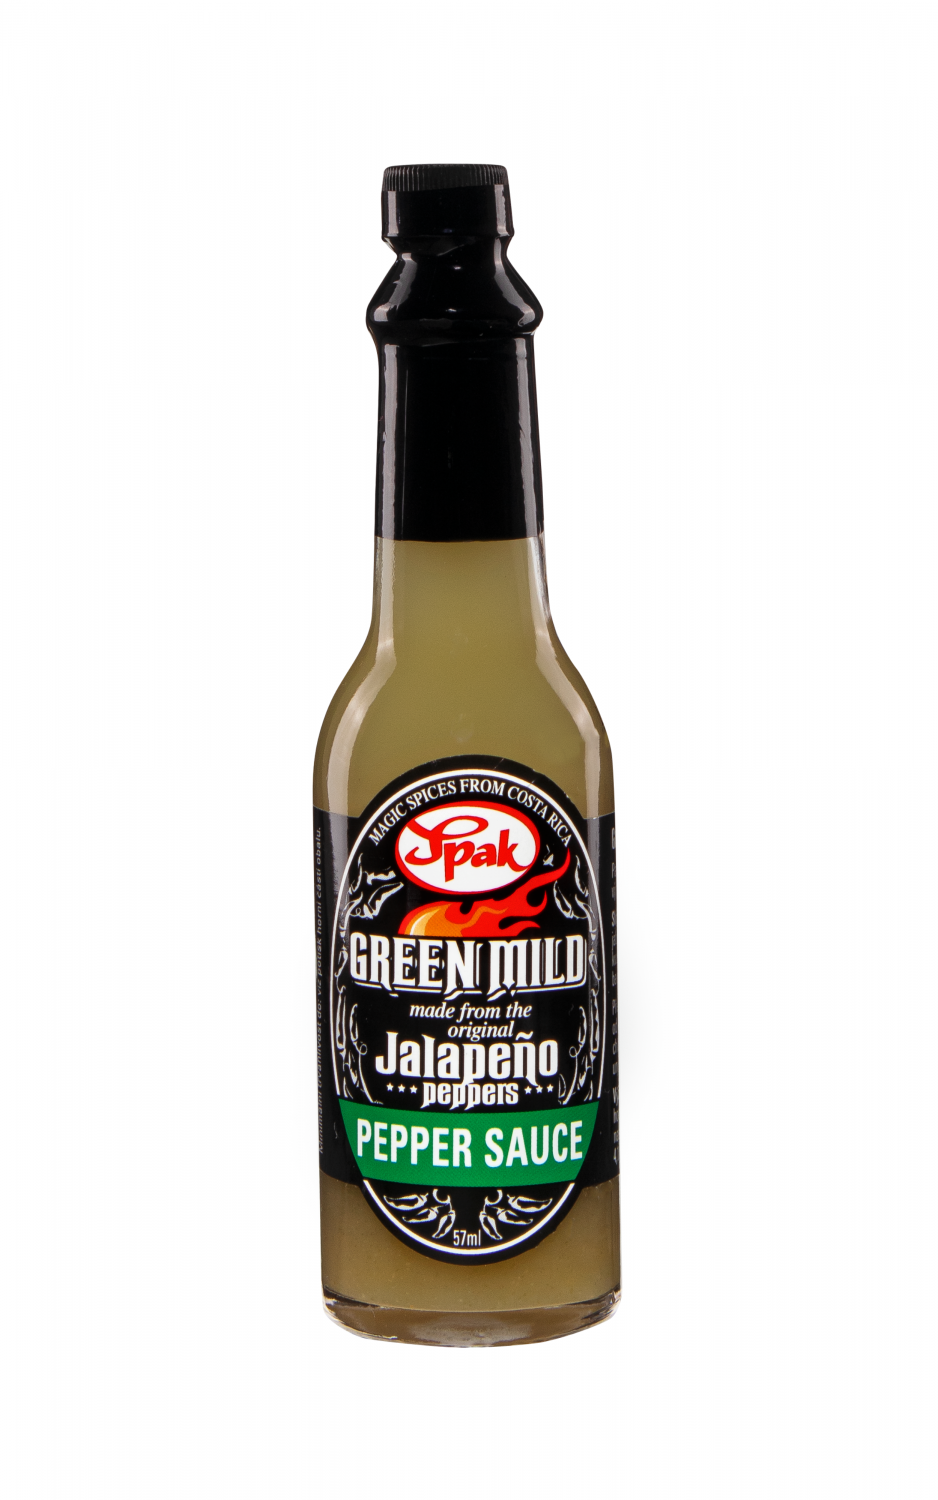 Pepper-sause-Green-mild-Jalapeno-57ml